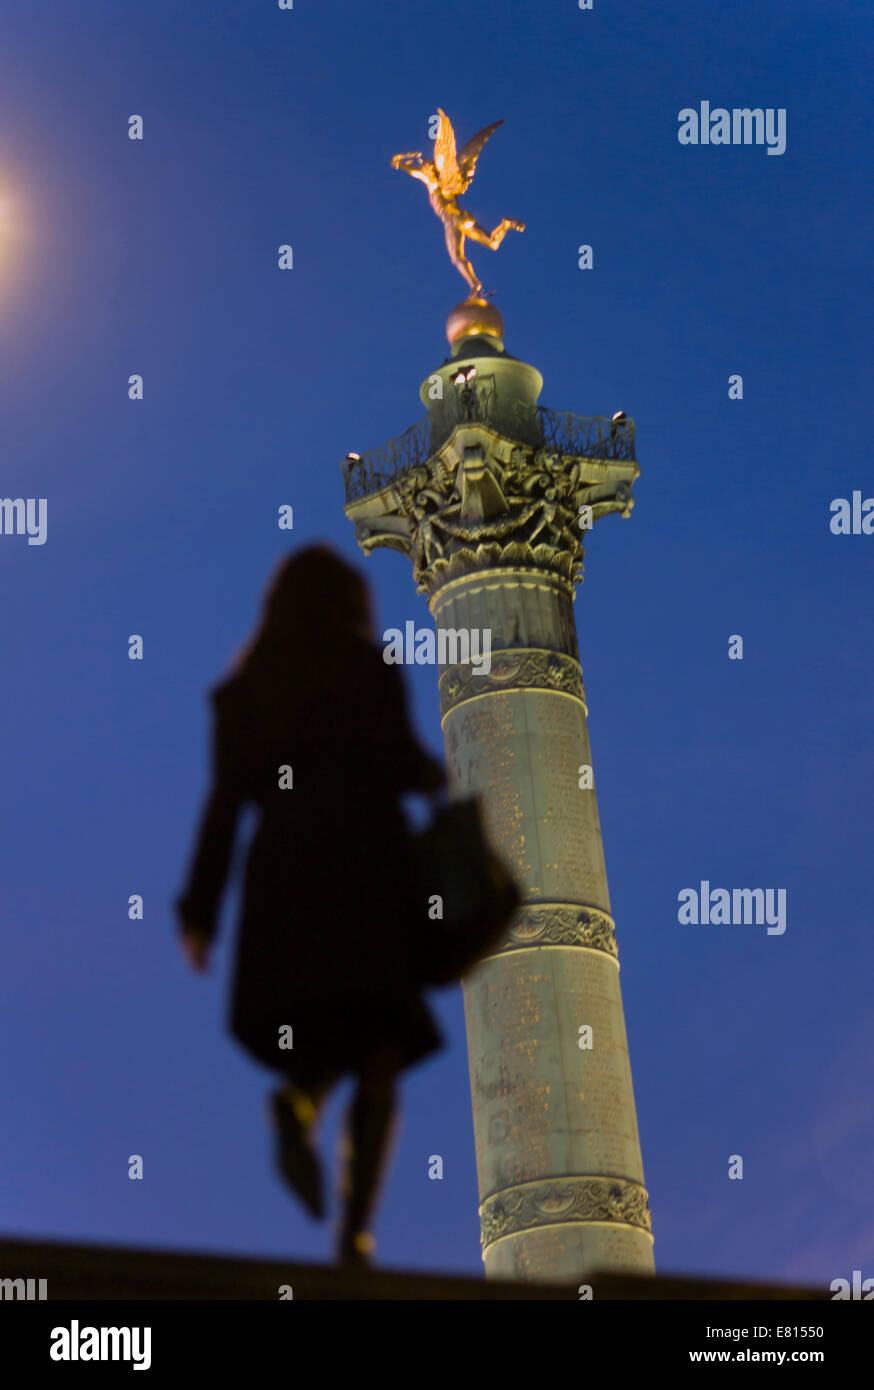 Francia, Paris, Colonne de Juillet rematada por la estatua del "genio de la libertad', la Place de la Bastille Foto de stock